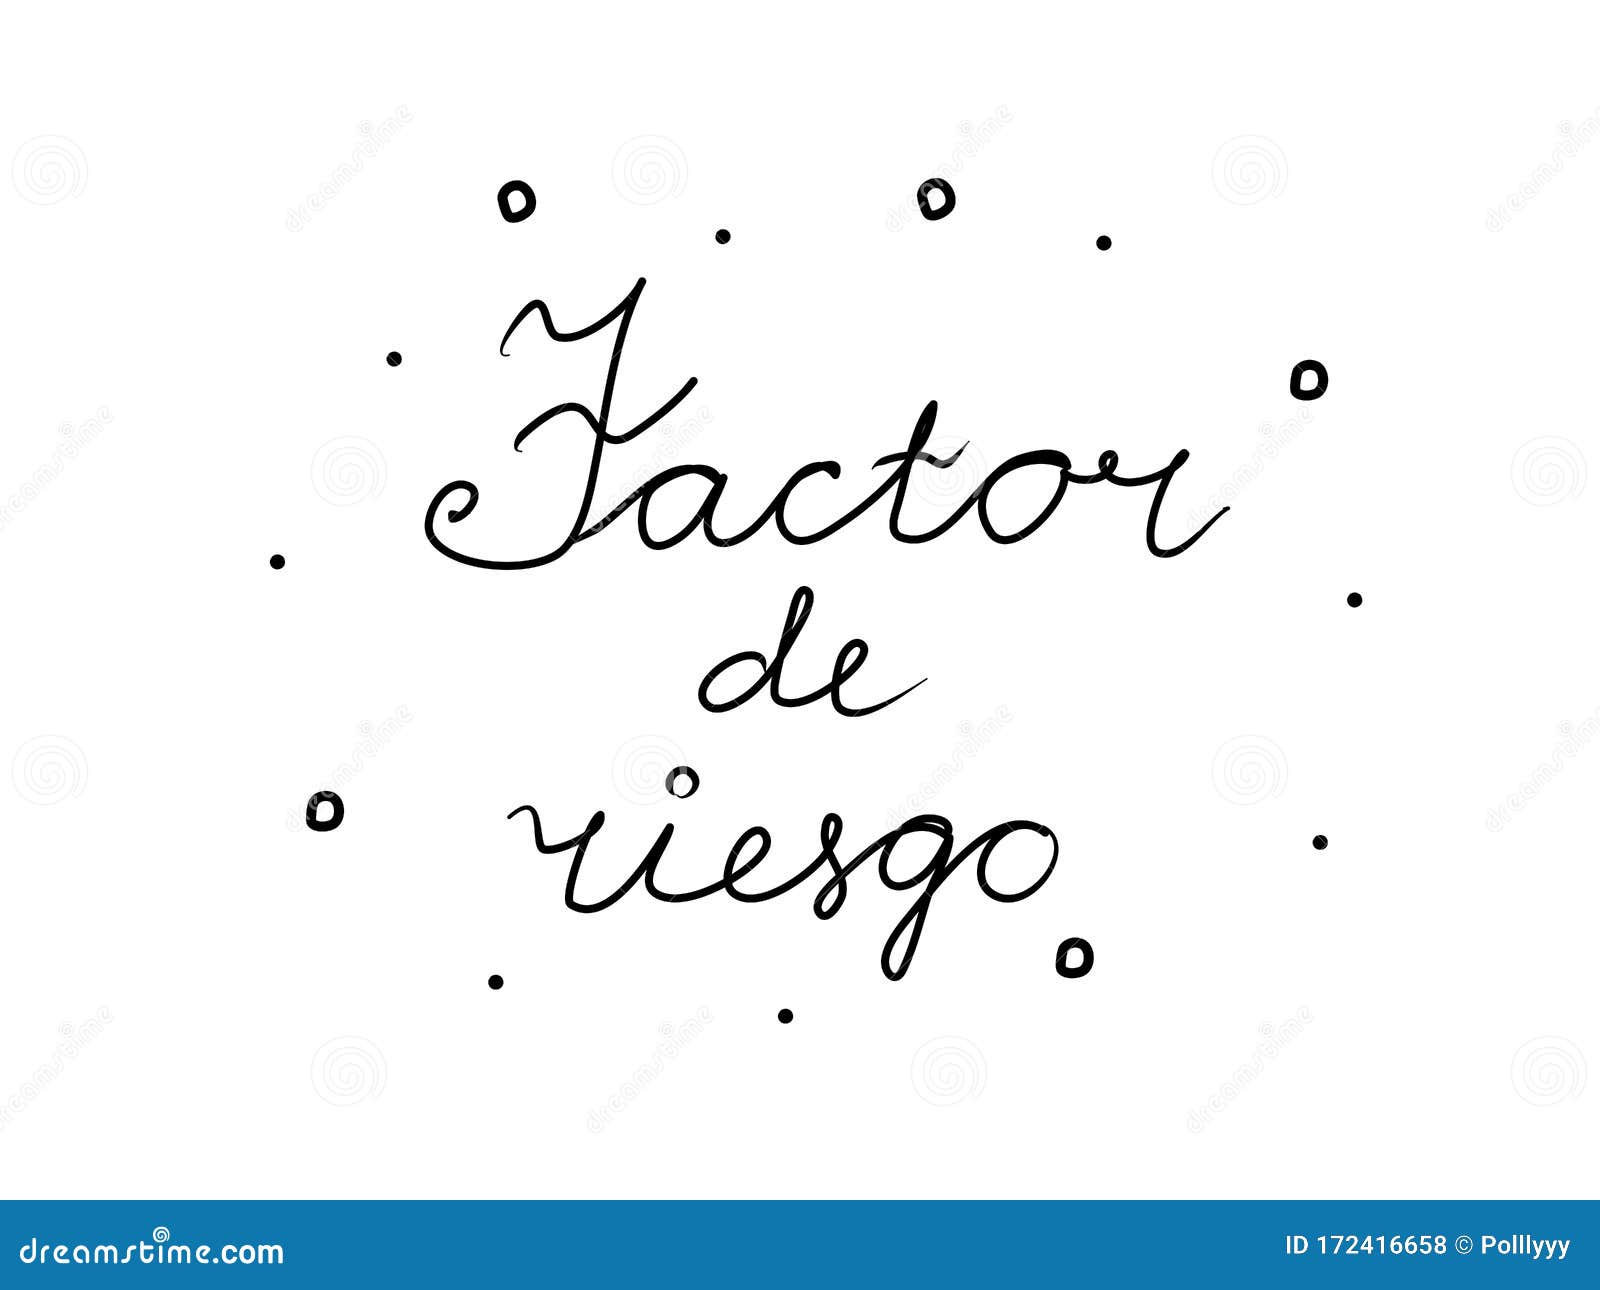 factor de riesgo phrase handwritten with a calligraphy brush. risk factor in spanish. modern brush calligraphy.  word